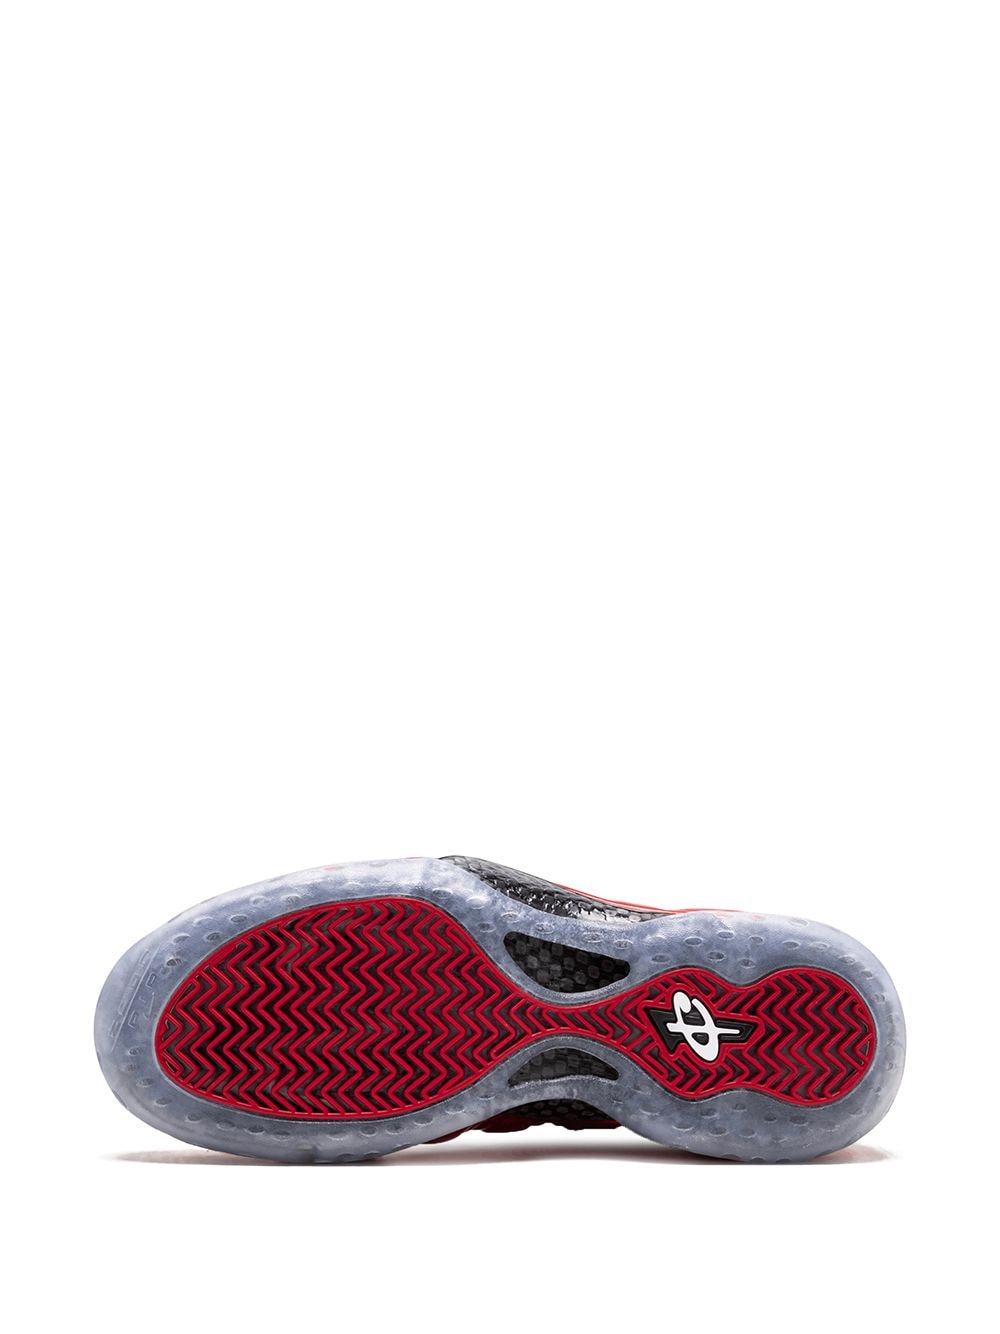 Shop Nike Air Foamposite One "metallic Red" Sneakers